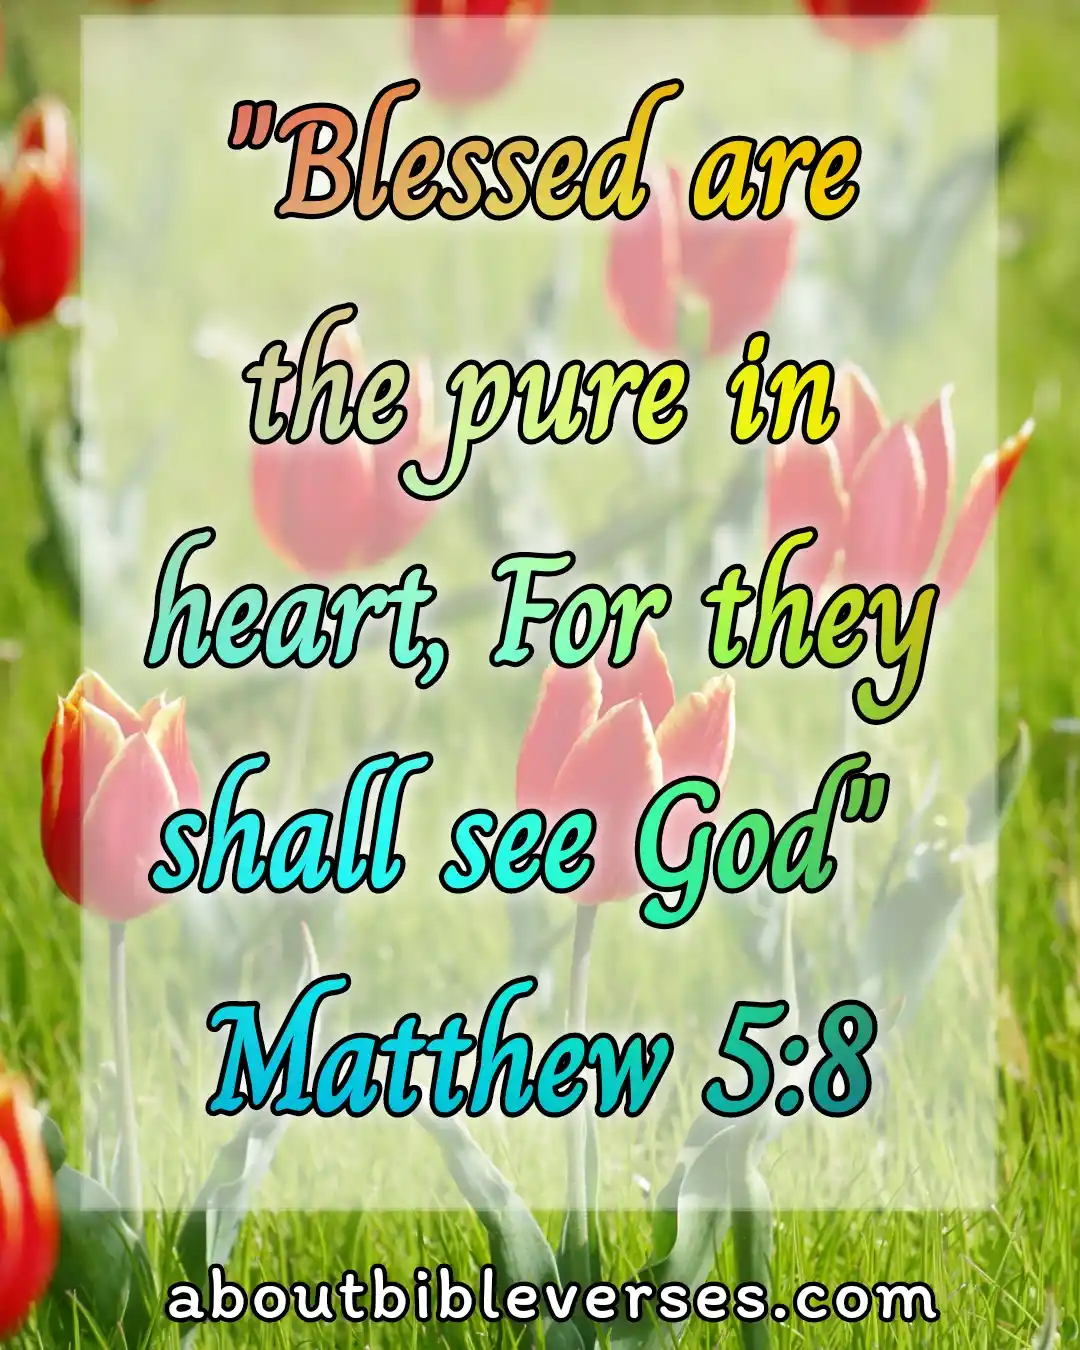 today bible verse (Matthew 5:8)